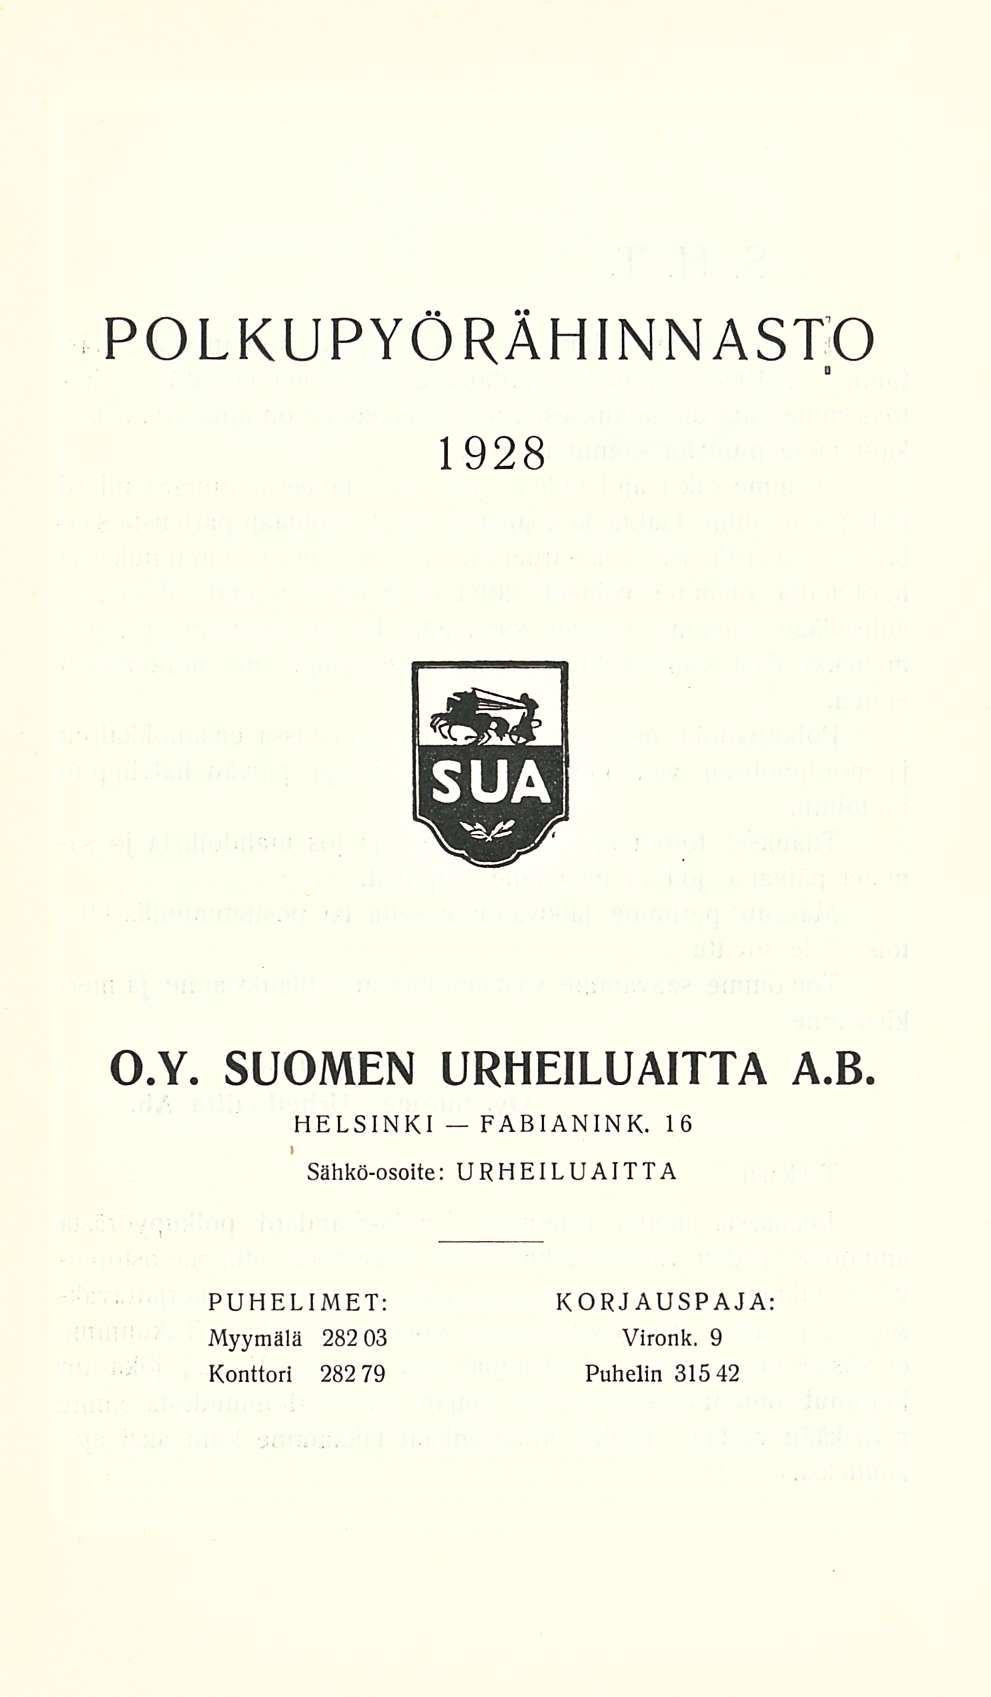 POLKUPYÖRÄHINNASTO0 1928 O.Y. SUOMEN URHEILUAITTA A.B. HELSINKI FABIANINK.